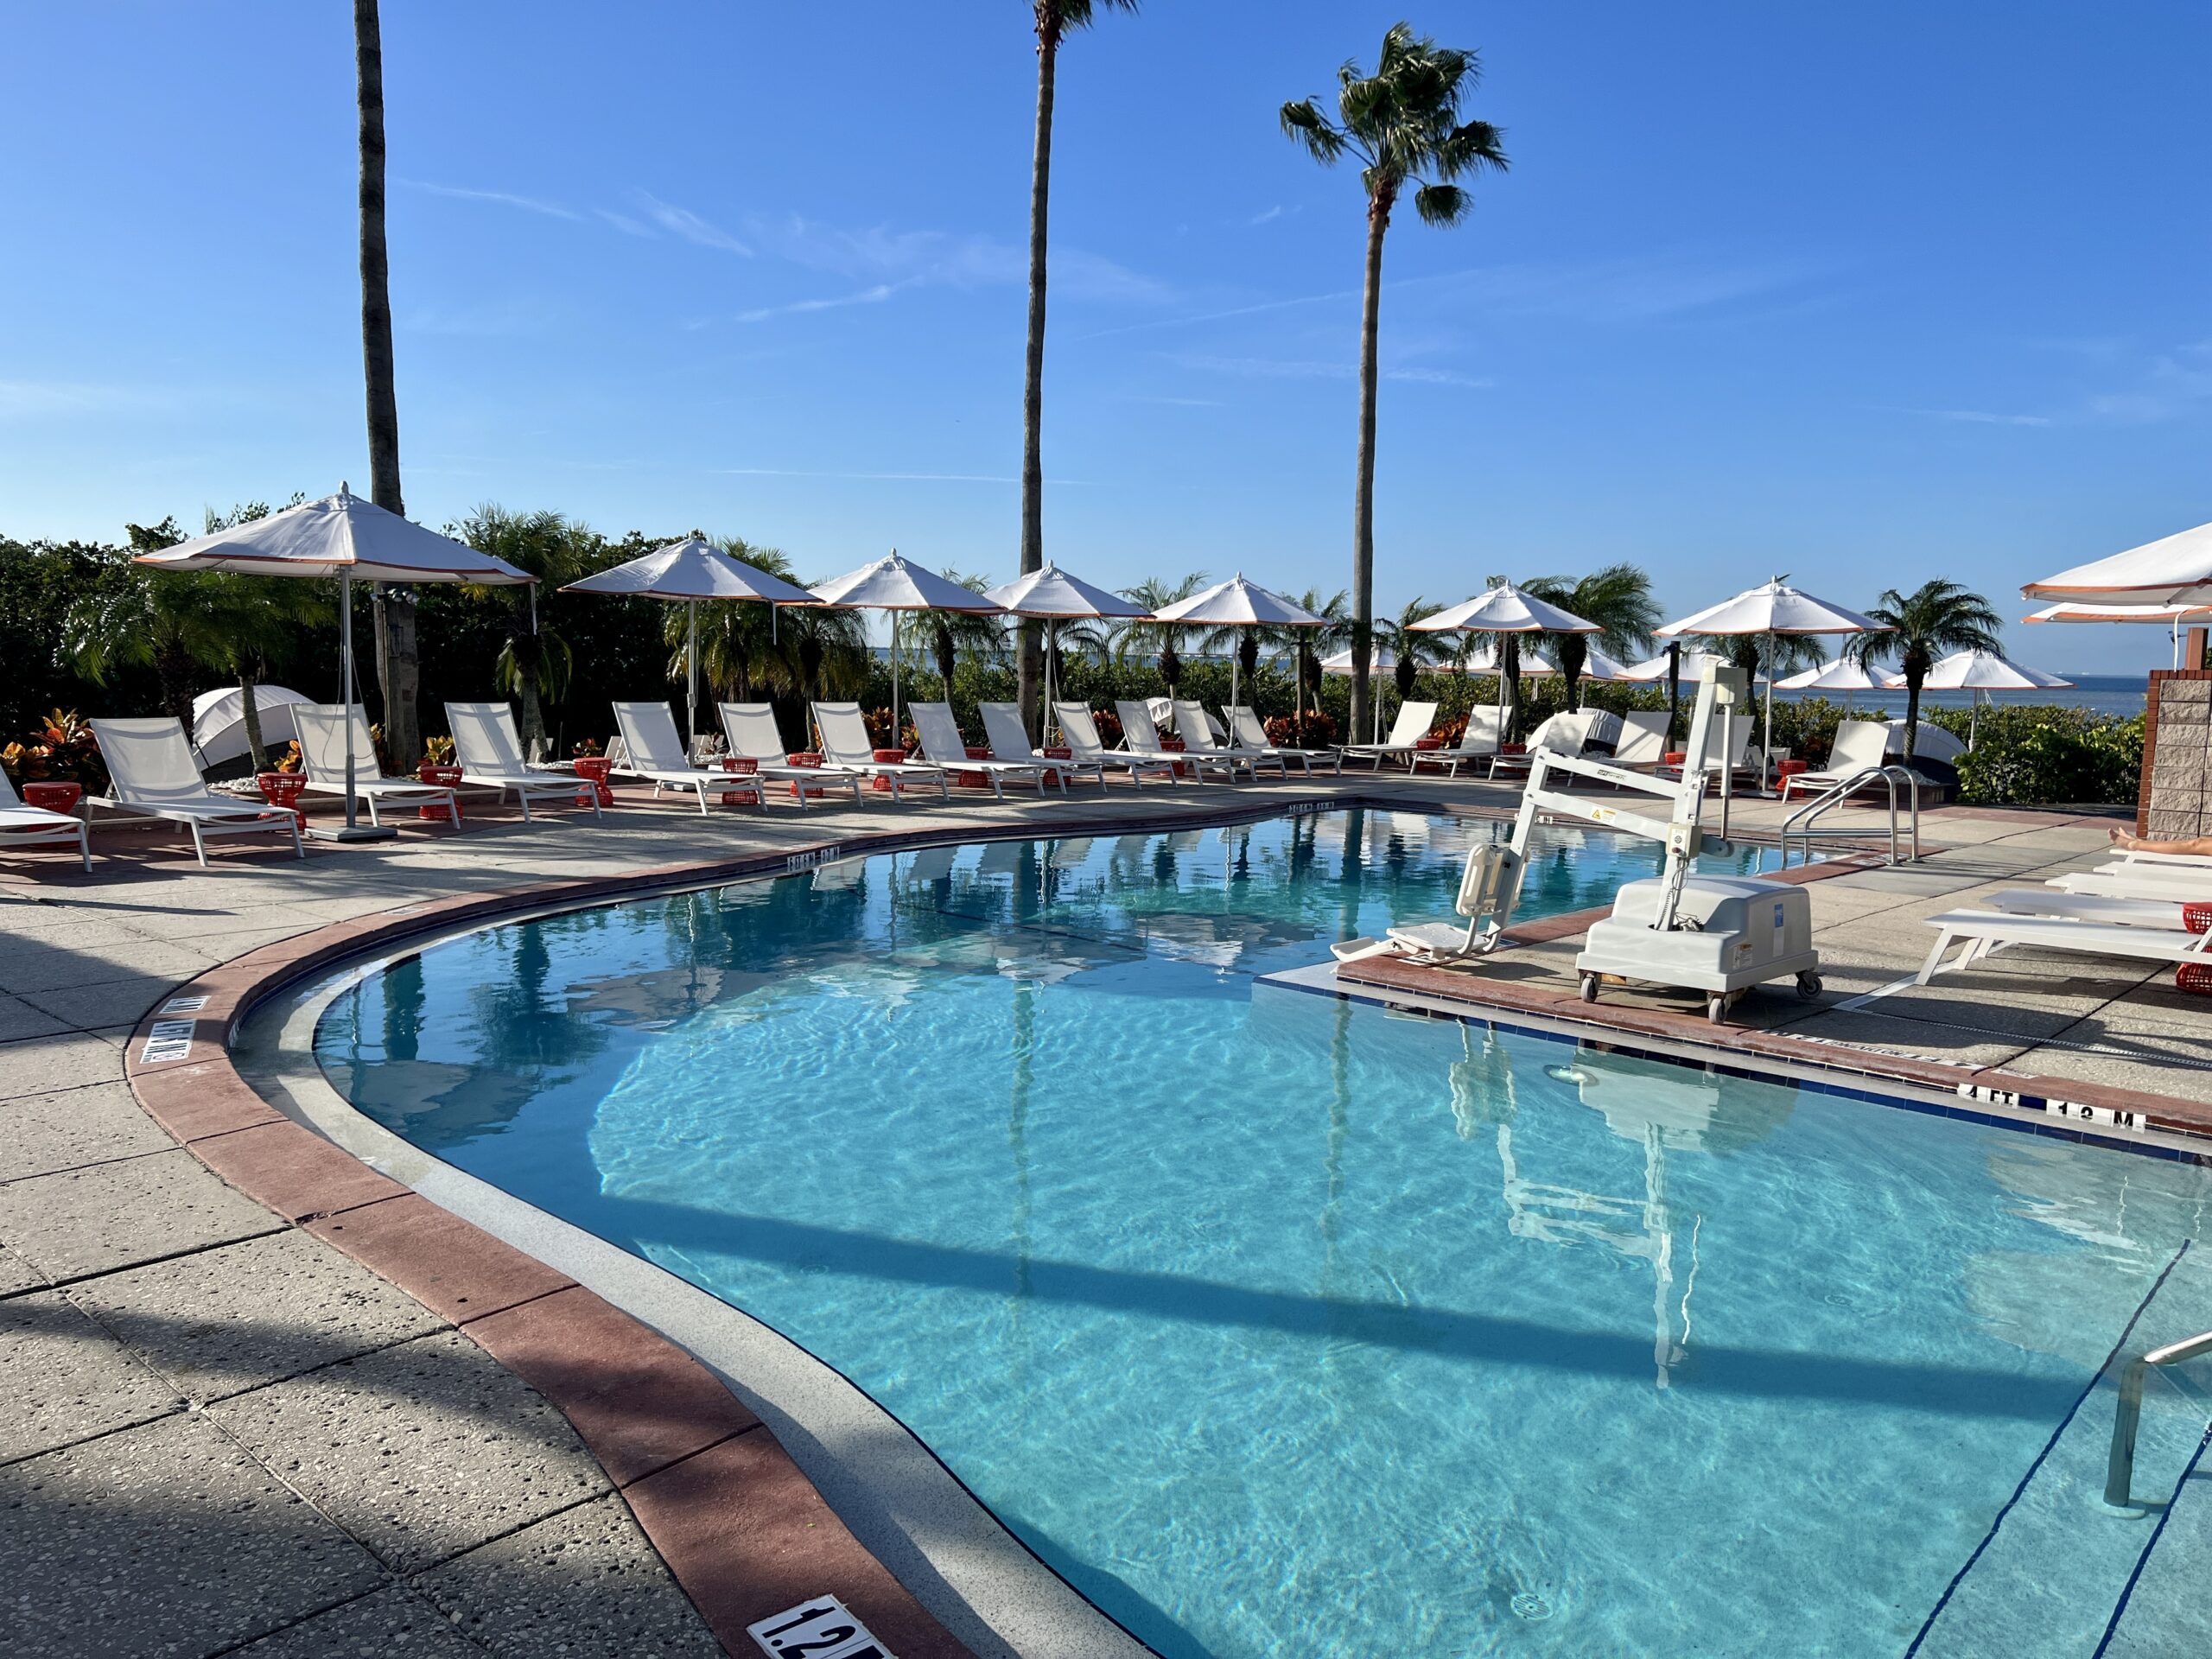 Grand Hyatt Tampa Casita Pool